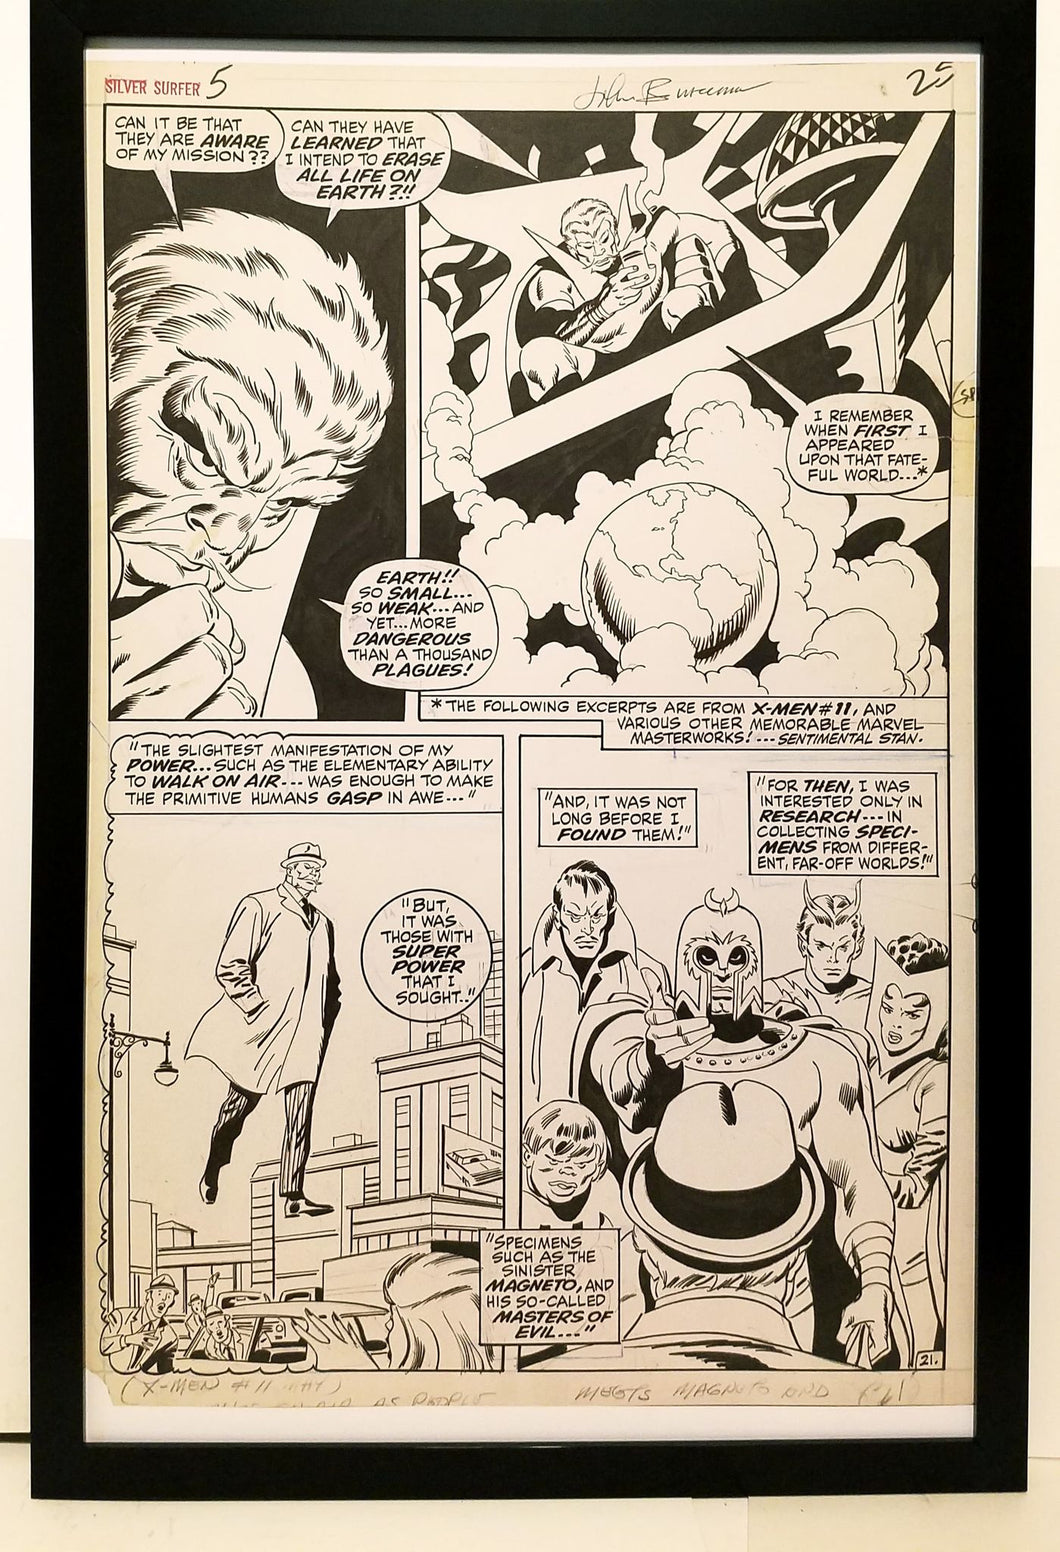 Silver Surfer #5 pg. 21 by John & Sal Buscema 11x17 FRAMED Original Art Poster Marvel Comics